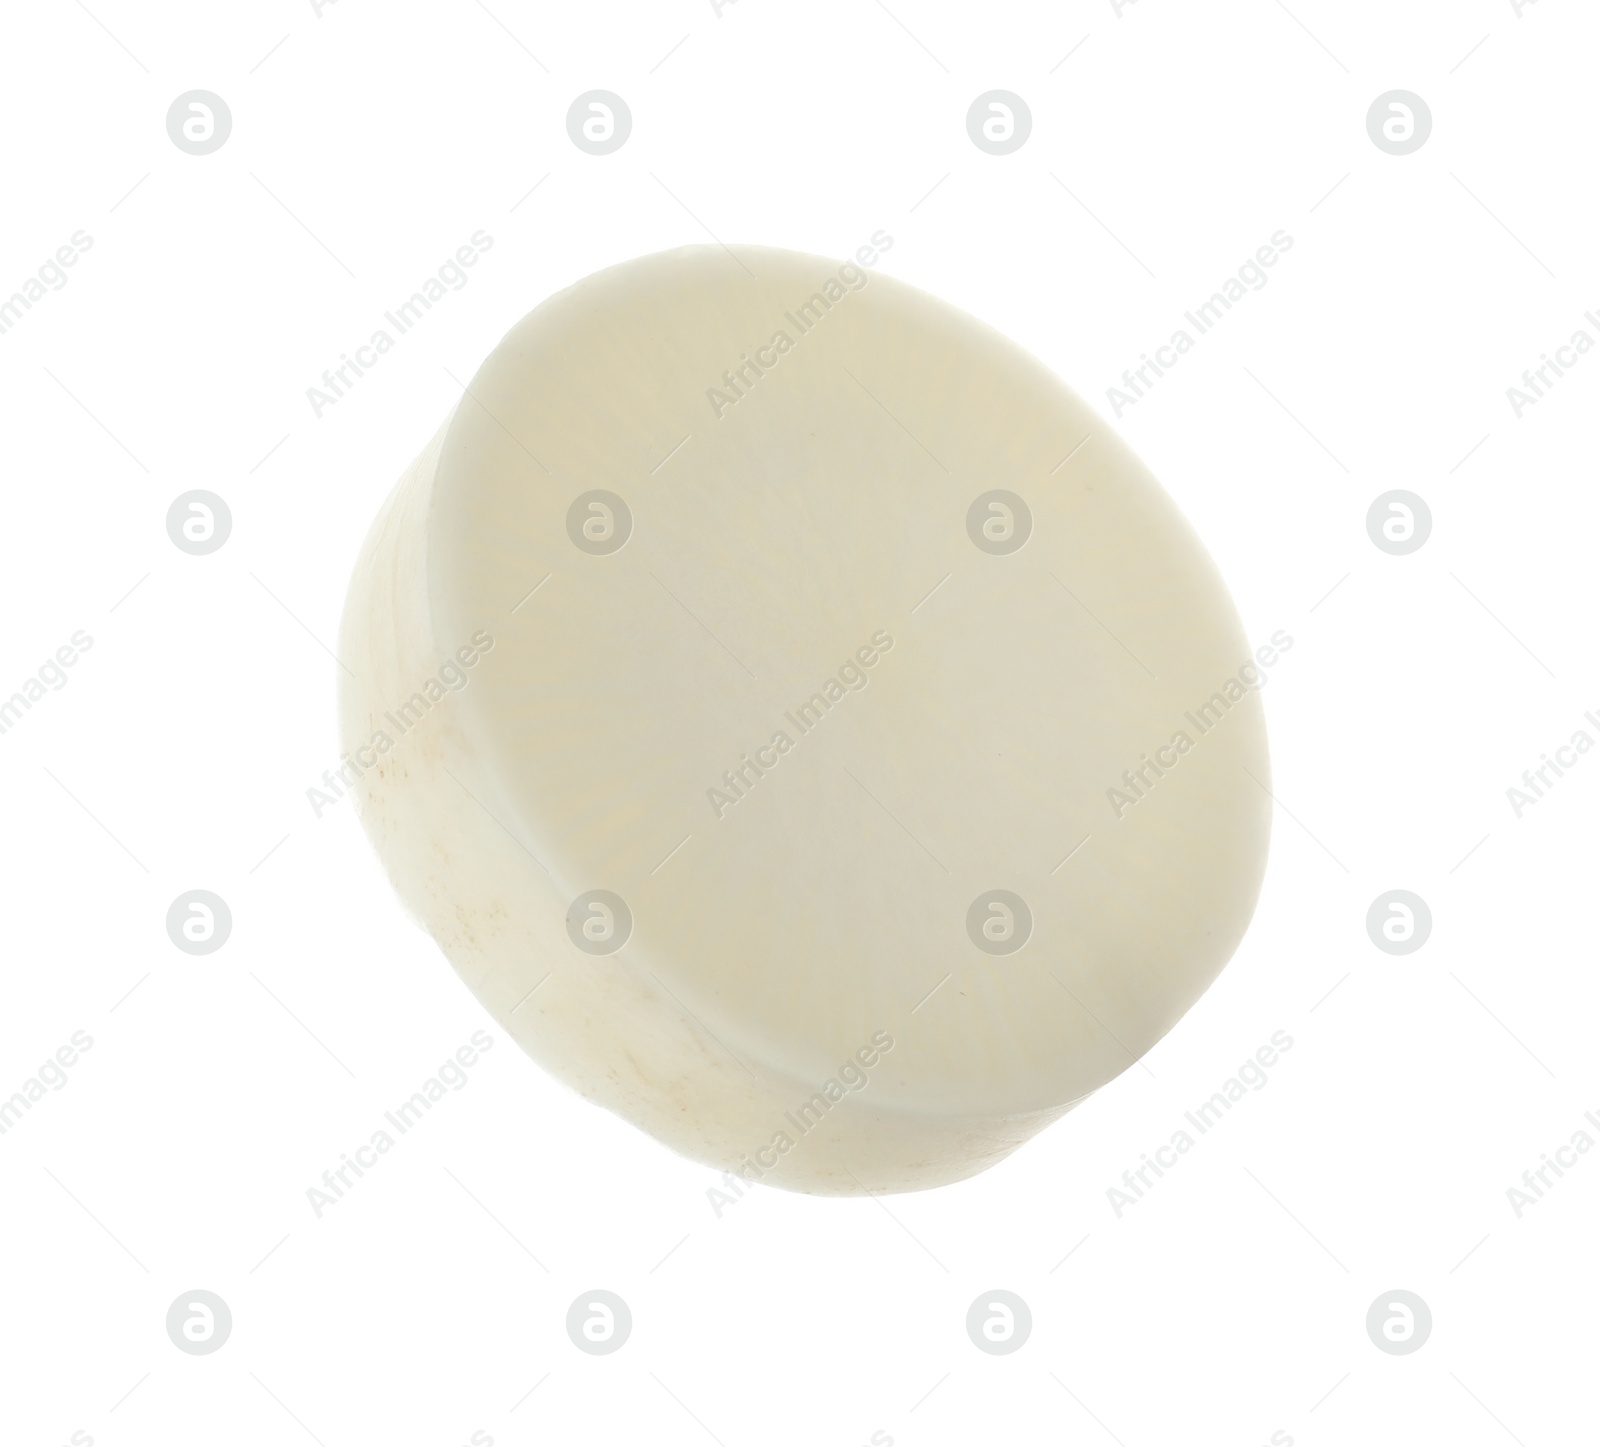 Photo of Slice of fresh ripe turnip on white background